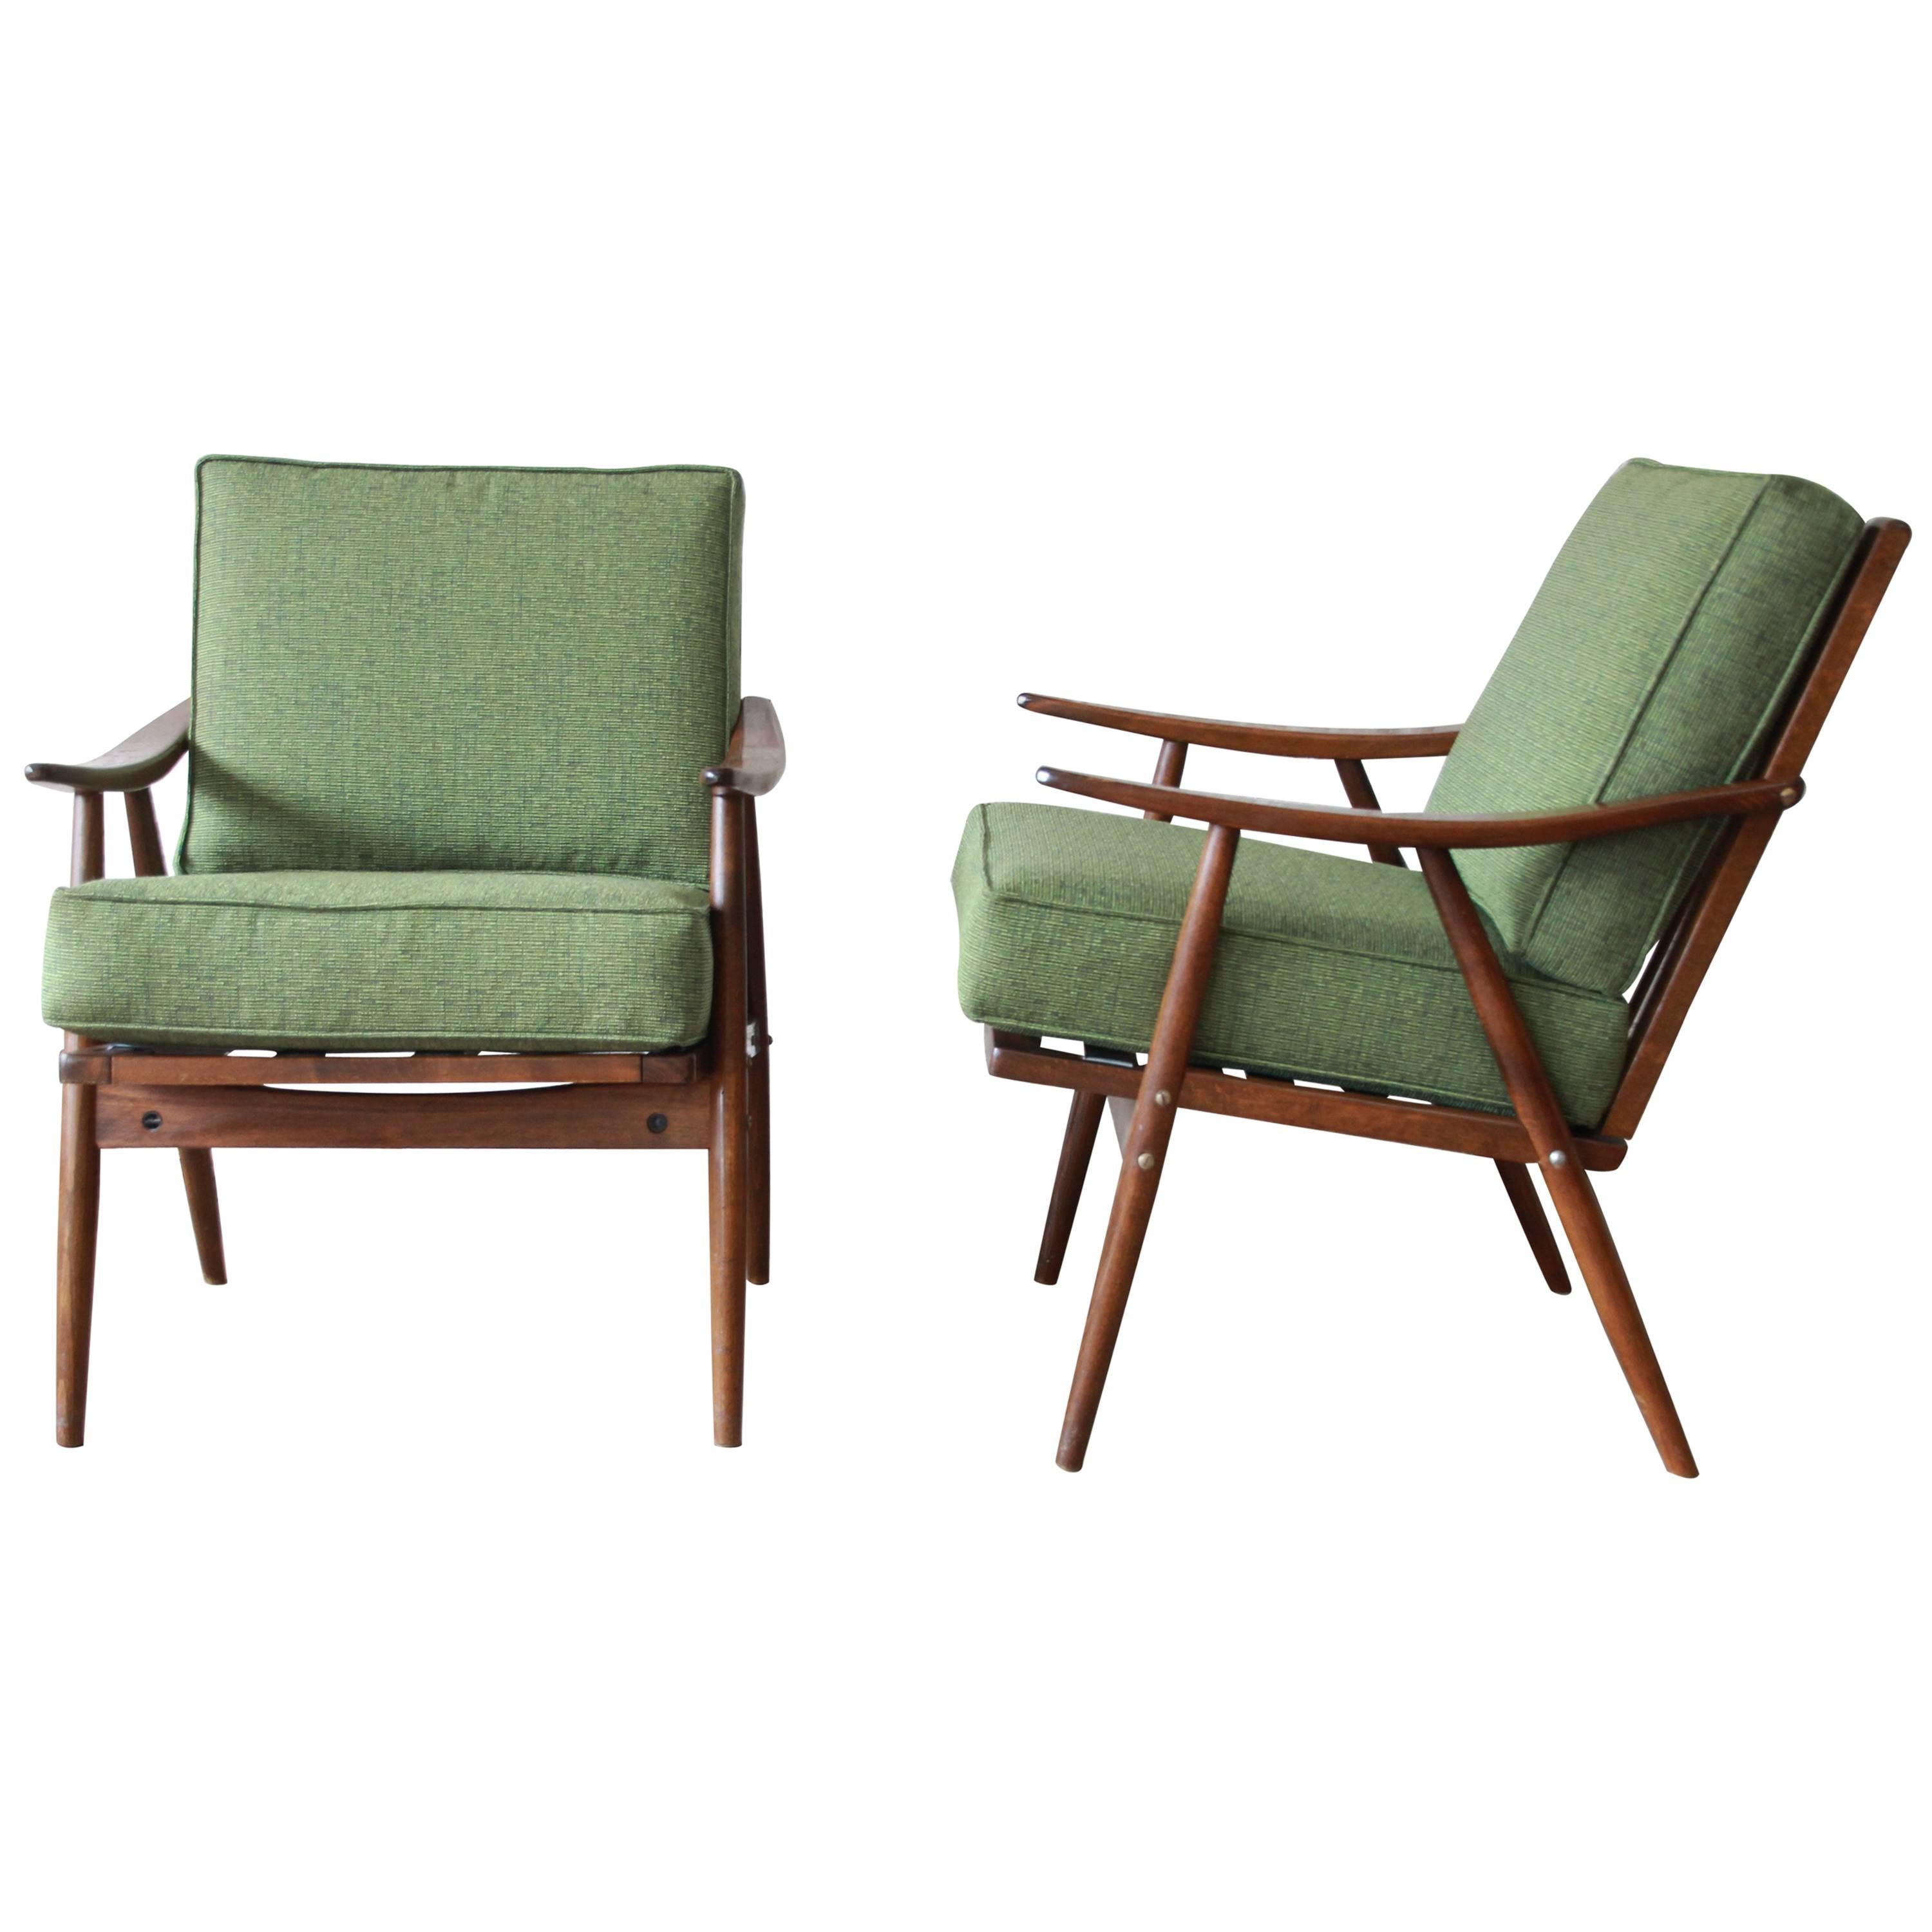 Pair of Mid-Century Modern Walnut Lounge Chairs by Ligna, circa 1950